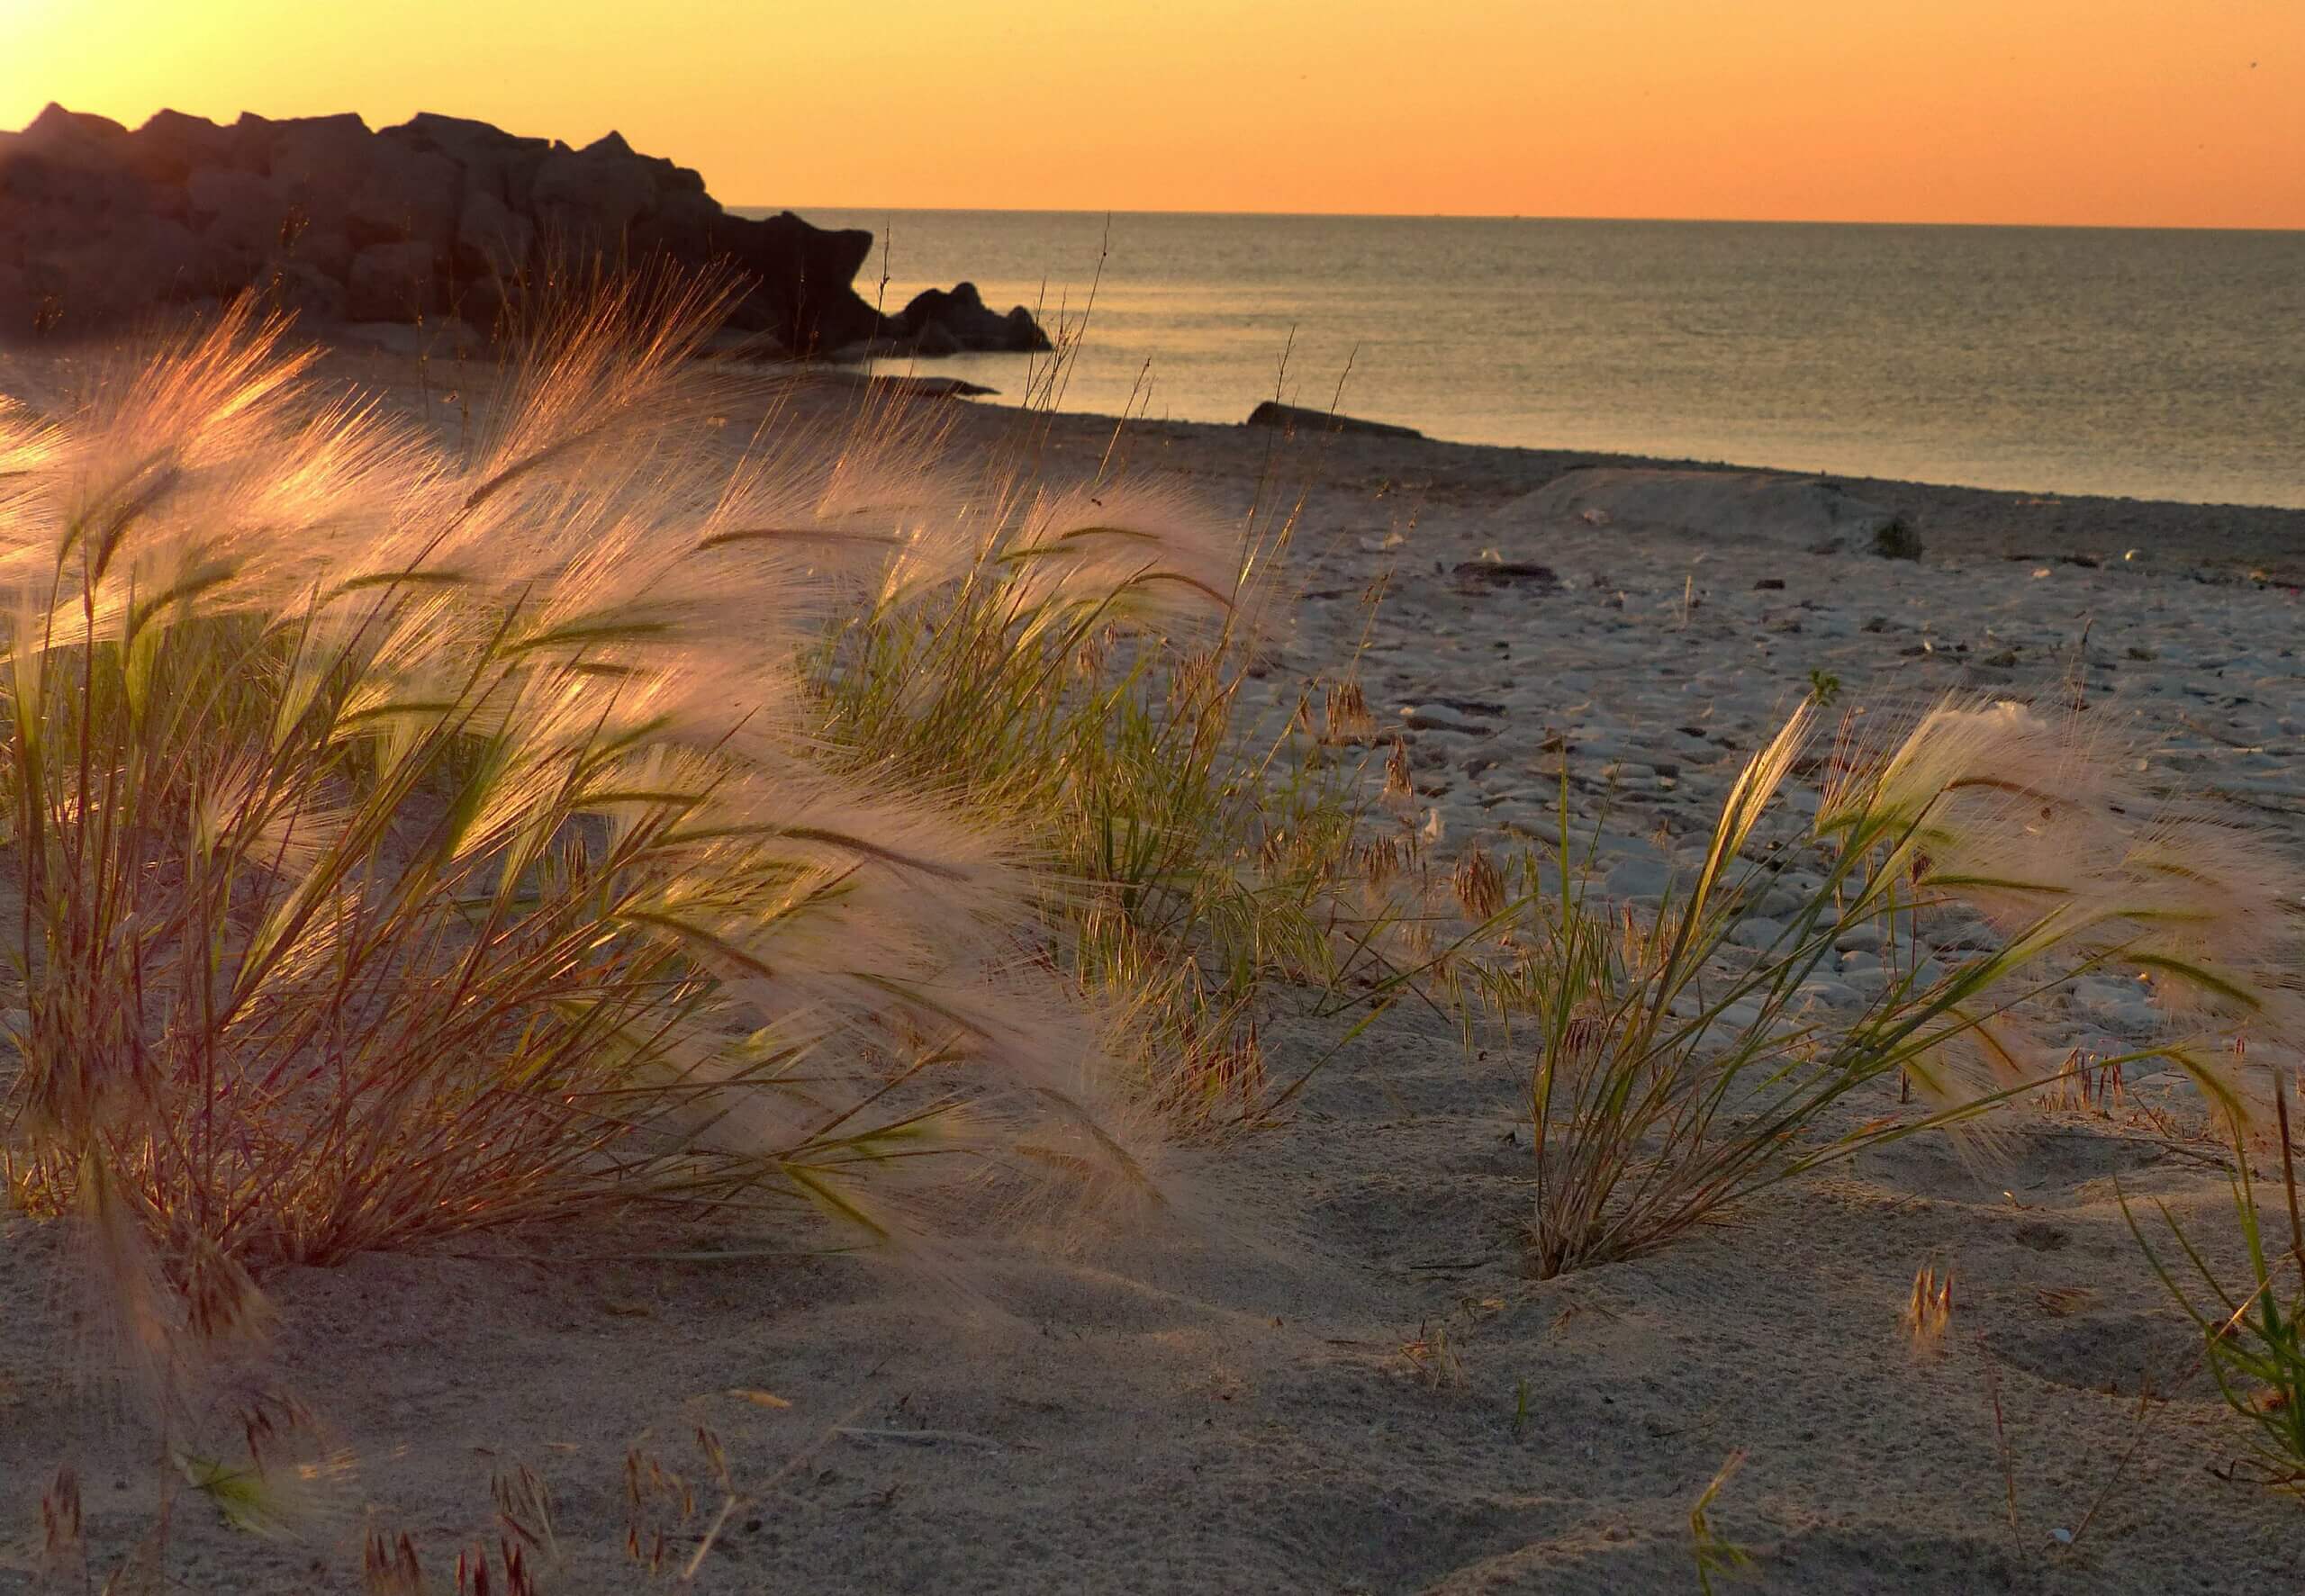 Knowles-Nelson Stewardship Program - sandy and rocky shoreline of Lake Michigan with scrub grass at dawn